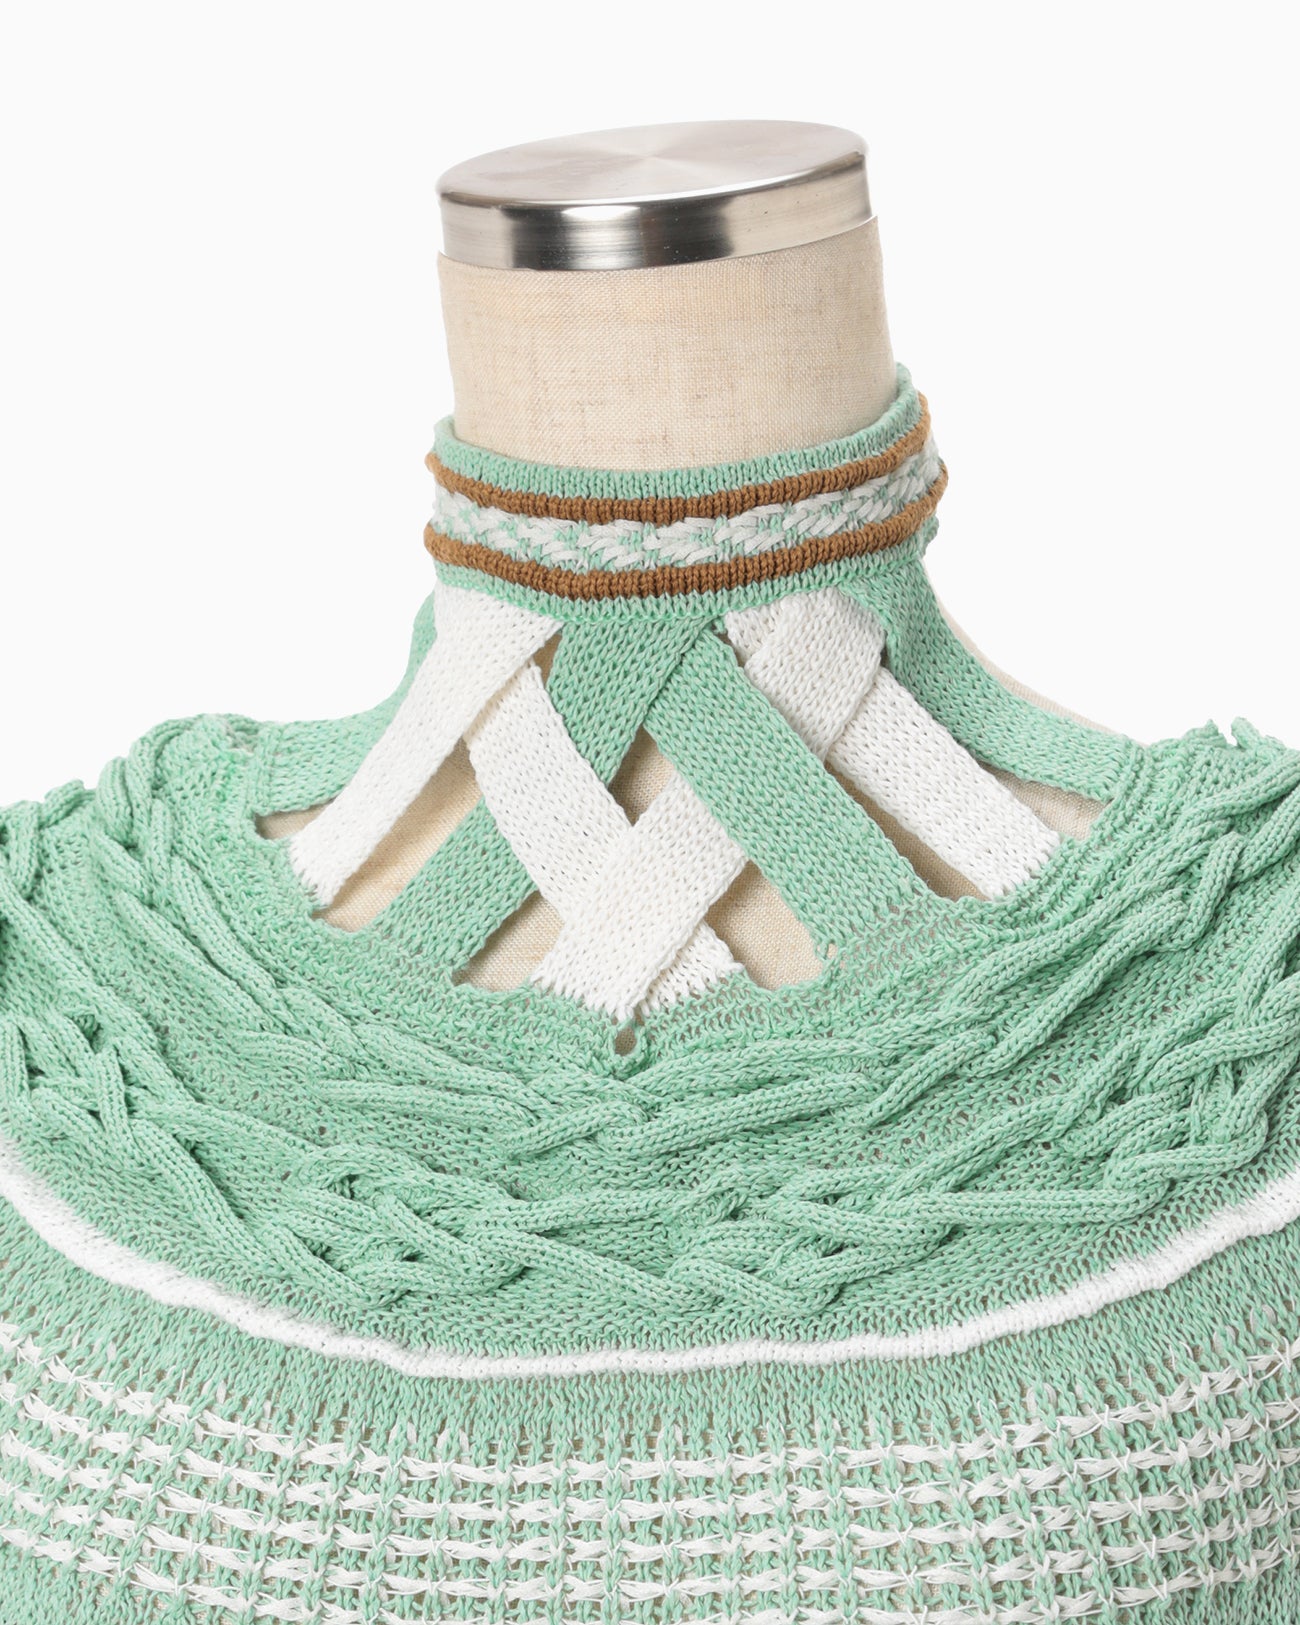 Bamboo Basket Pattern Knitted Dress - mint green